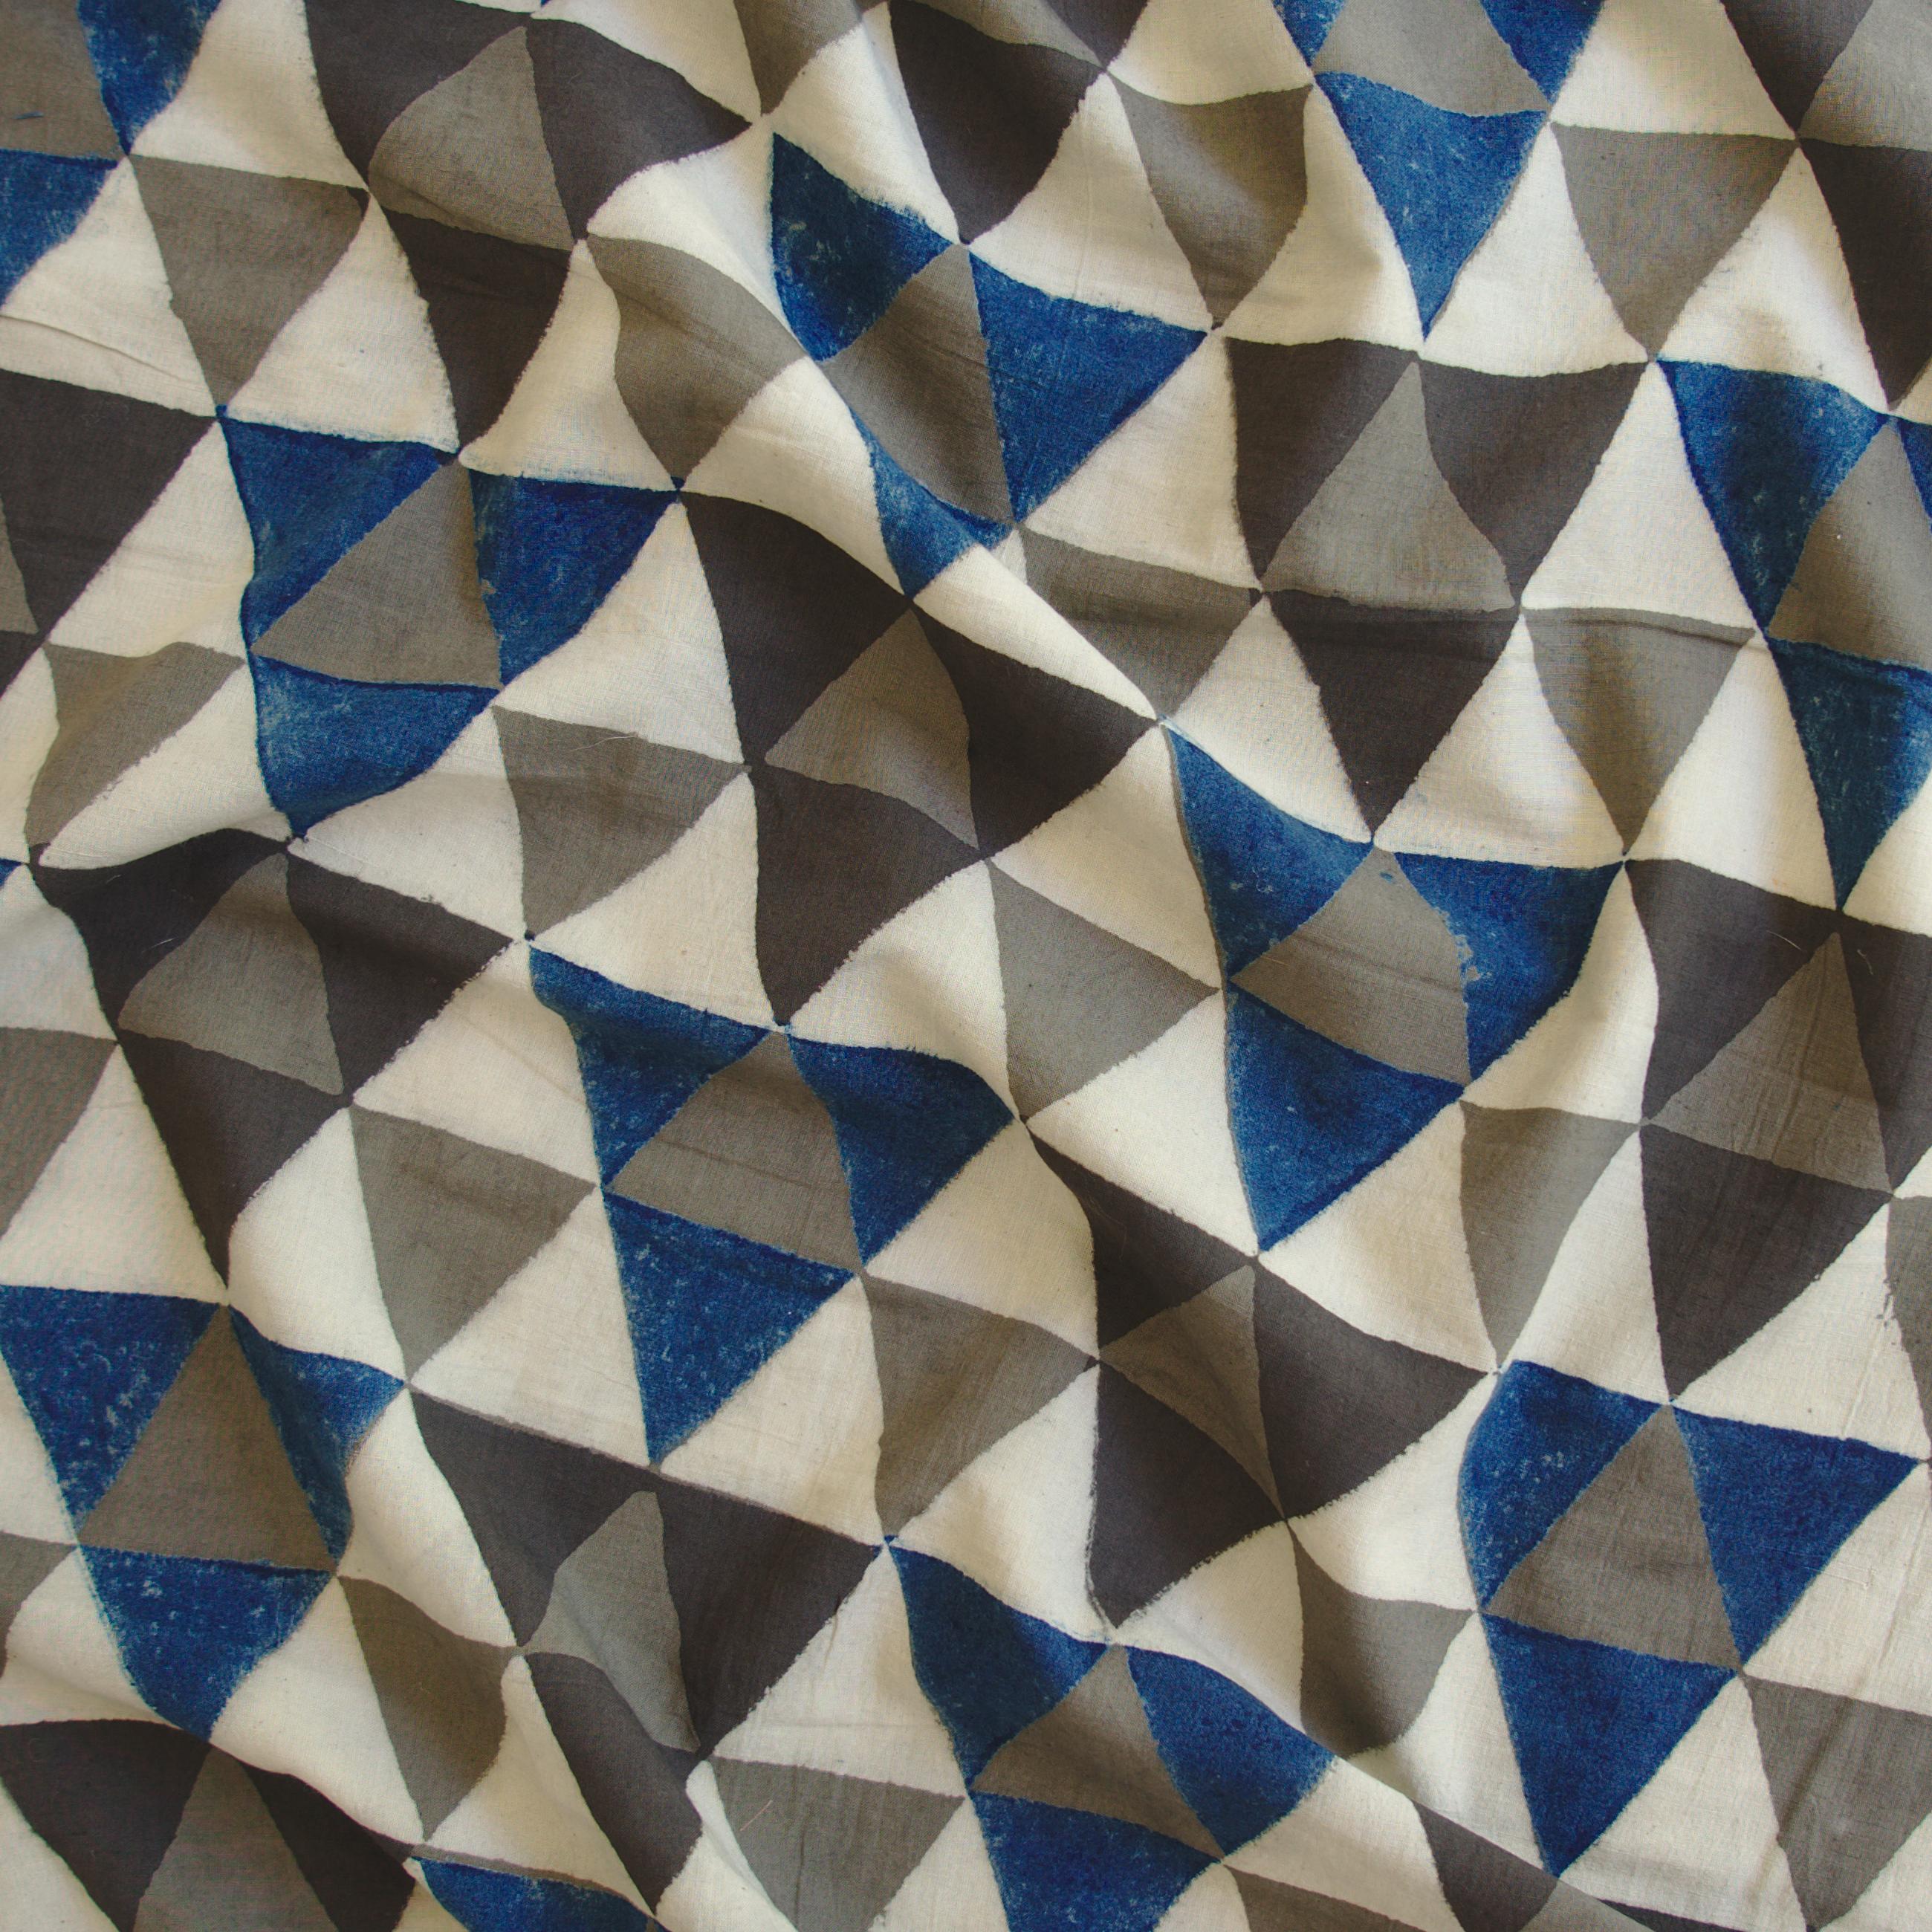 Block Printed Fabric, 100% Cotton, Ajrak Design: Beige Base, Small Grey Triangles, Big Indigo Blue, Black Triangles. Contrast